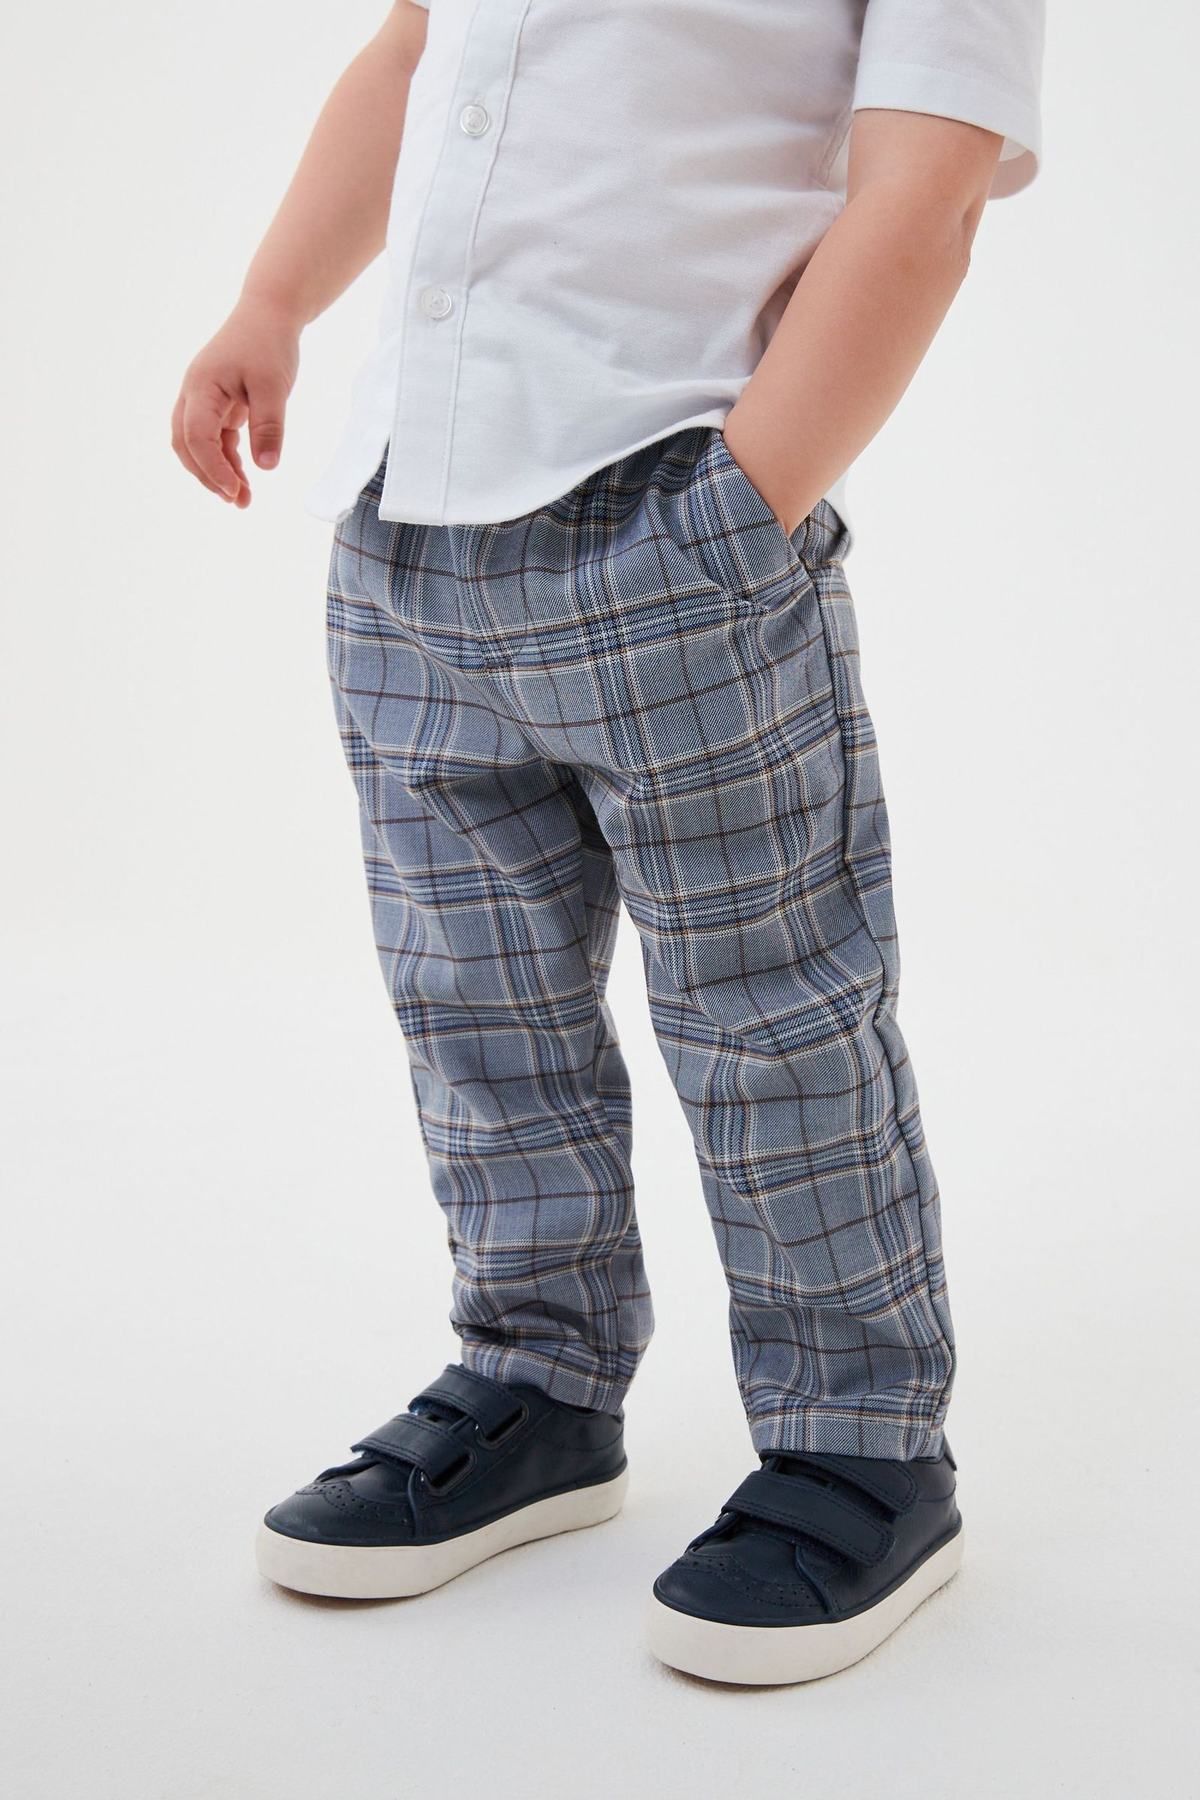 Buy Aj DEZInES Boys White & Black Checked Shirt With Trousers - Clothing  Set for Boys 21333716 | Myntra